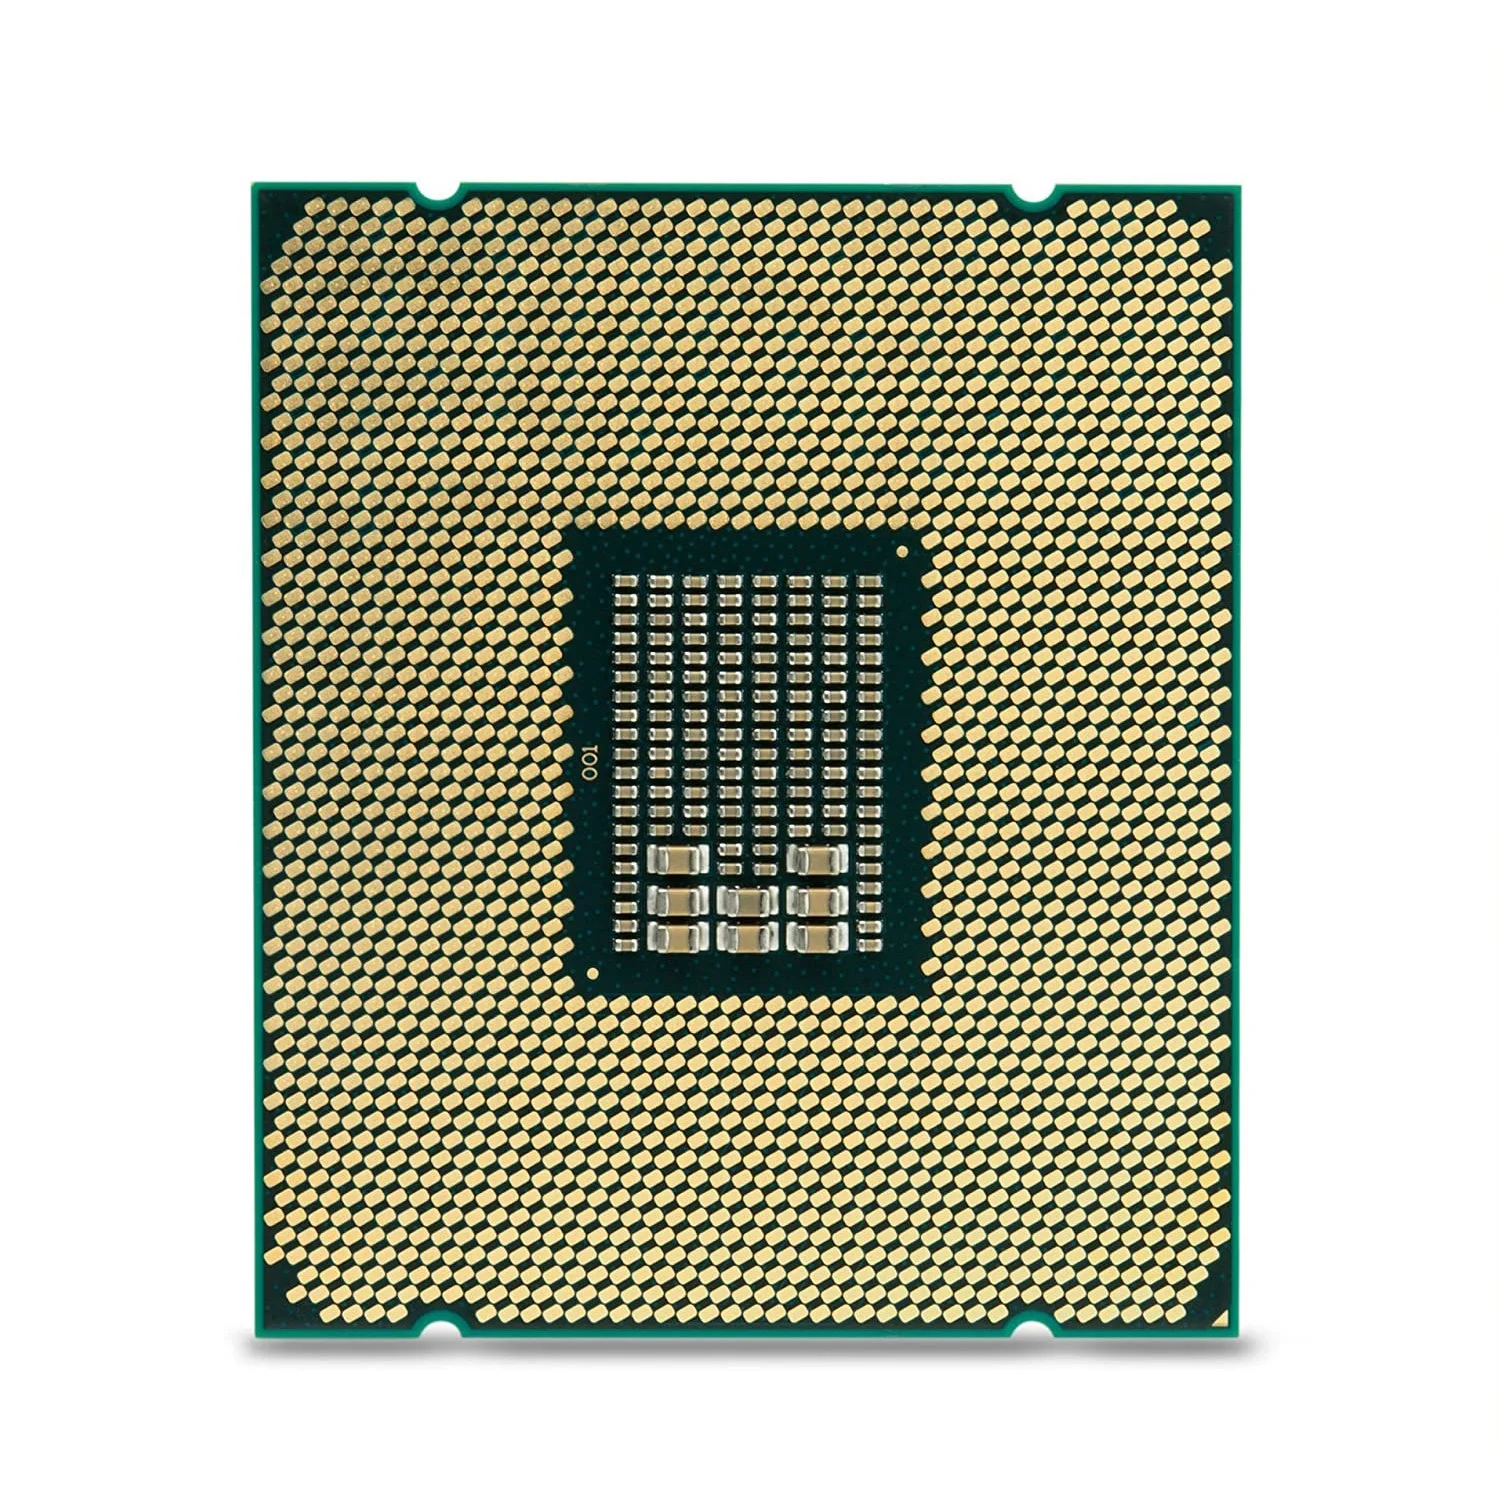 Camon 20 процессор. Intel Core i7-6950x extreme Edition lga2011-3, 10 x 3000 МГЦ. Intel Core i7-6900k lga2011-3, 8 x 3200 МГЦ. I7 6900k. I7 6800k.